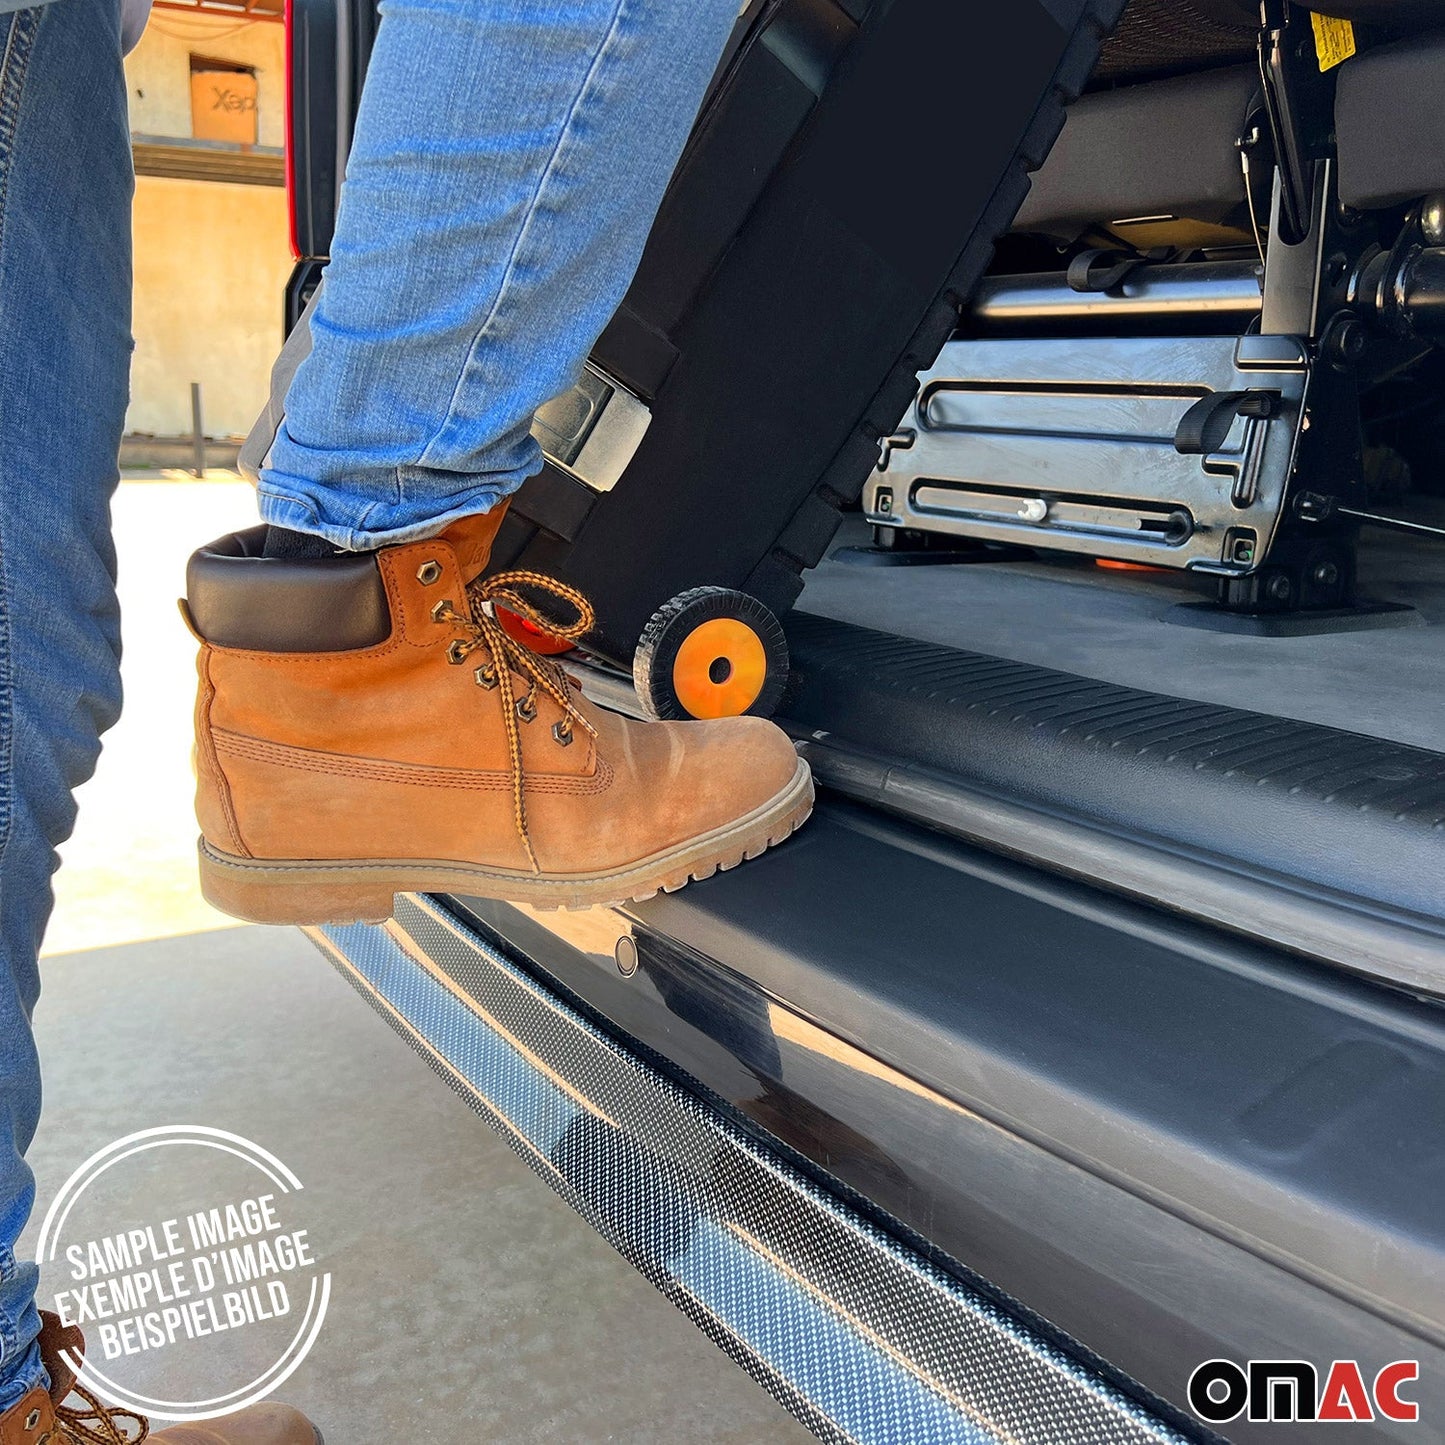 OMAC Rear Bumper Sill Cover Protector Guard for VW Tiguan 2018-2024 ABS Black OMAC7548093PT